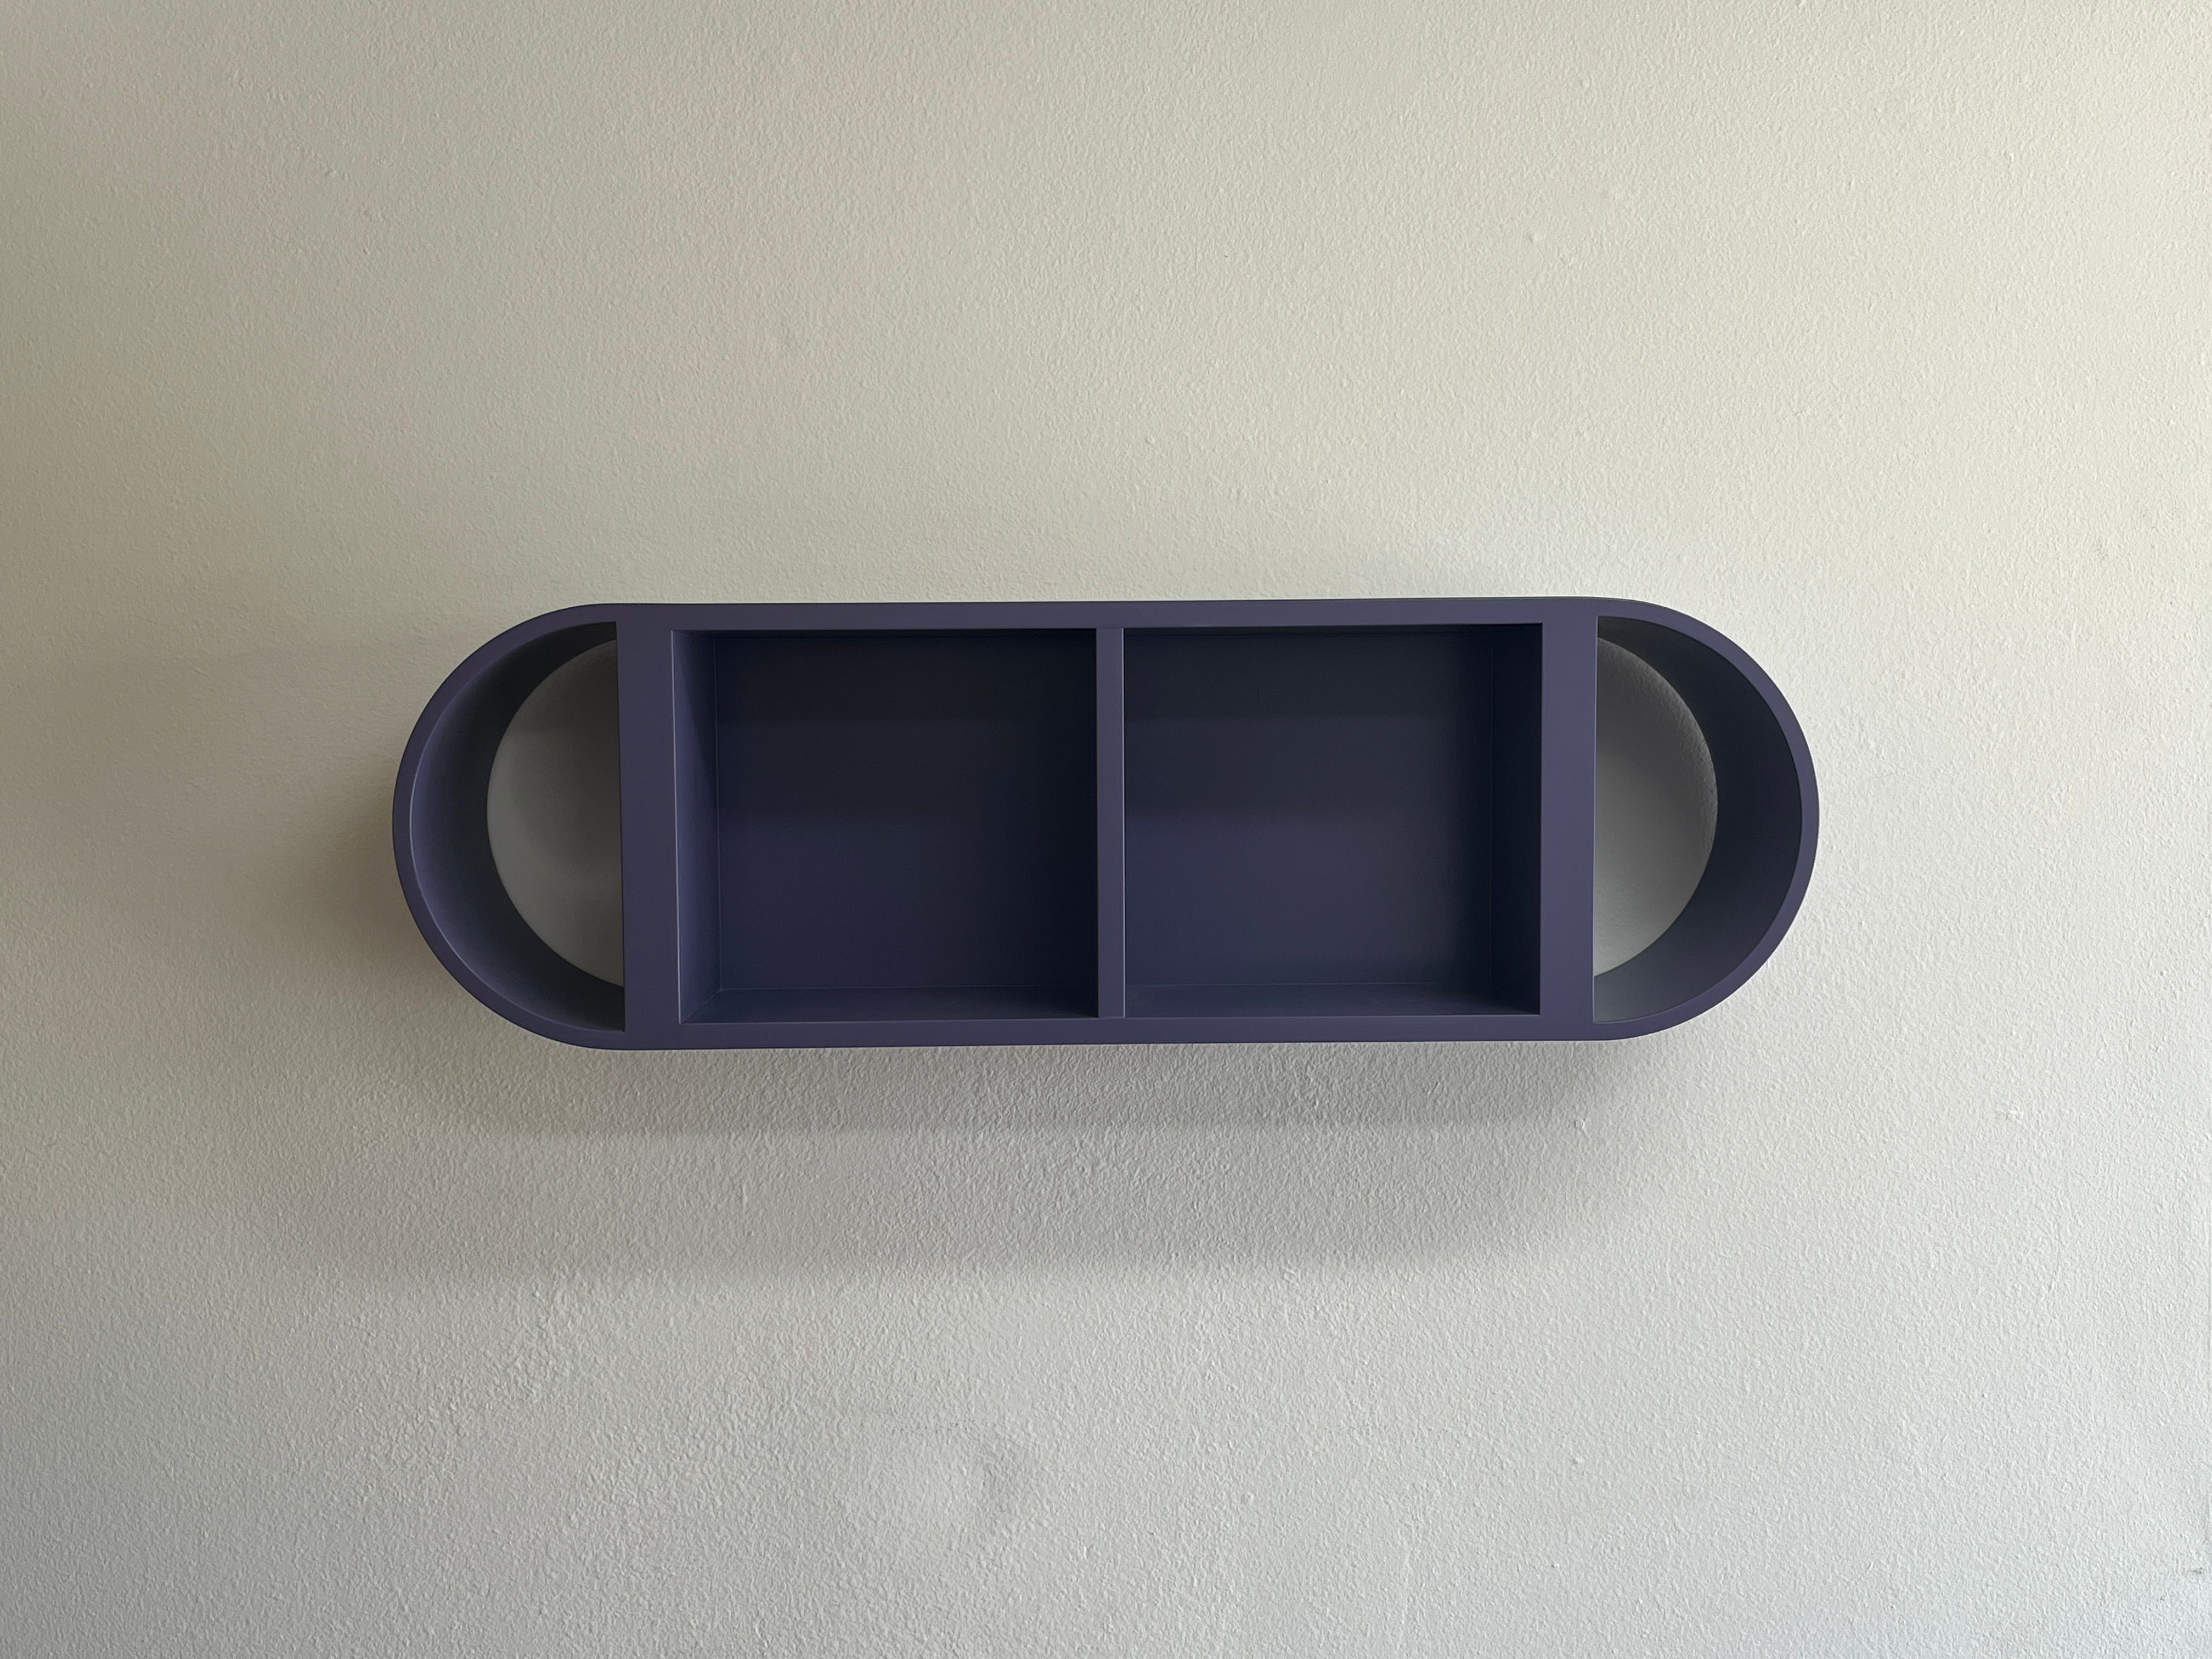  Wall Hanging Shelf - Purple product image 1